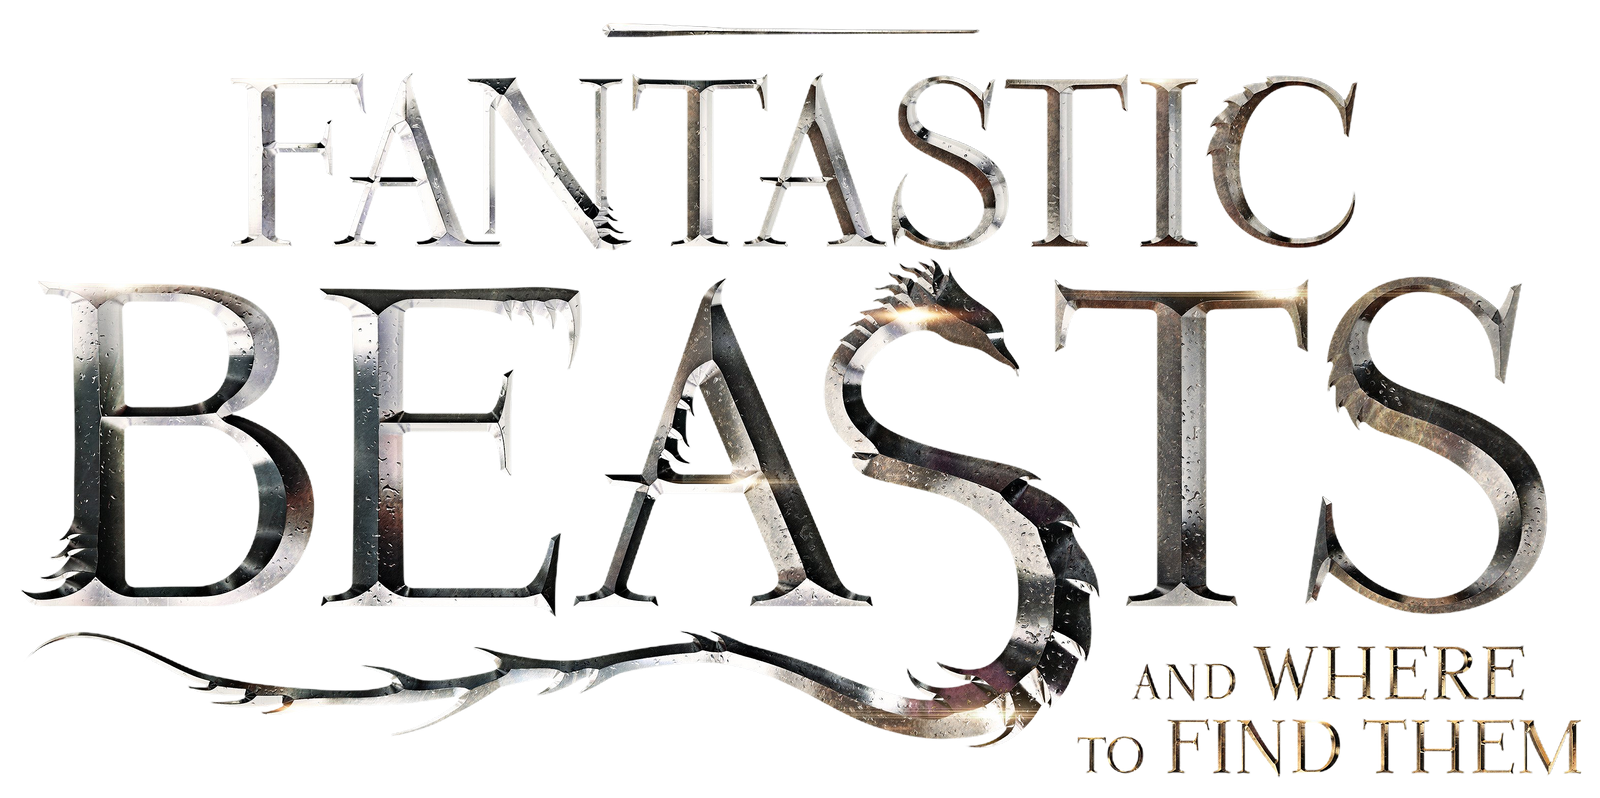 Fantastic Beasts logo.